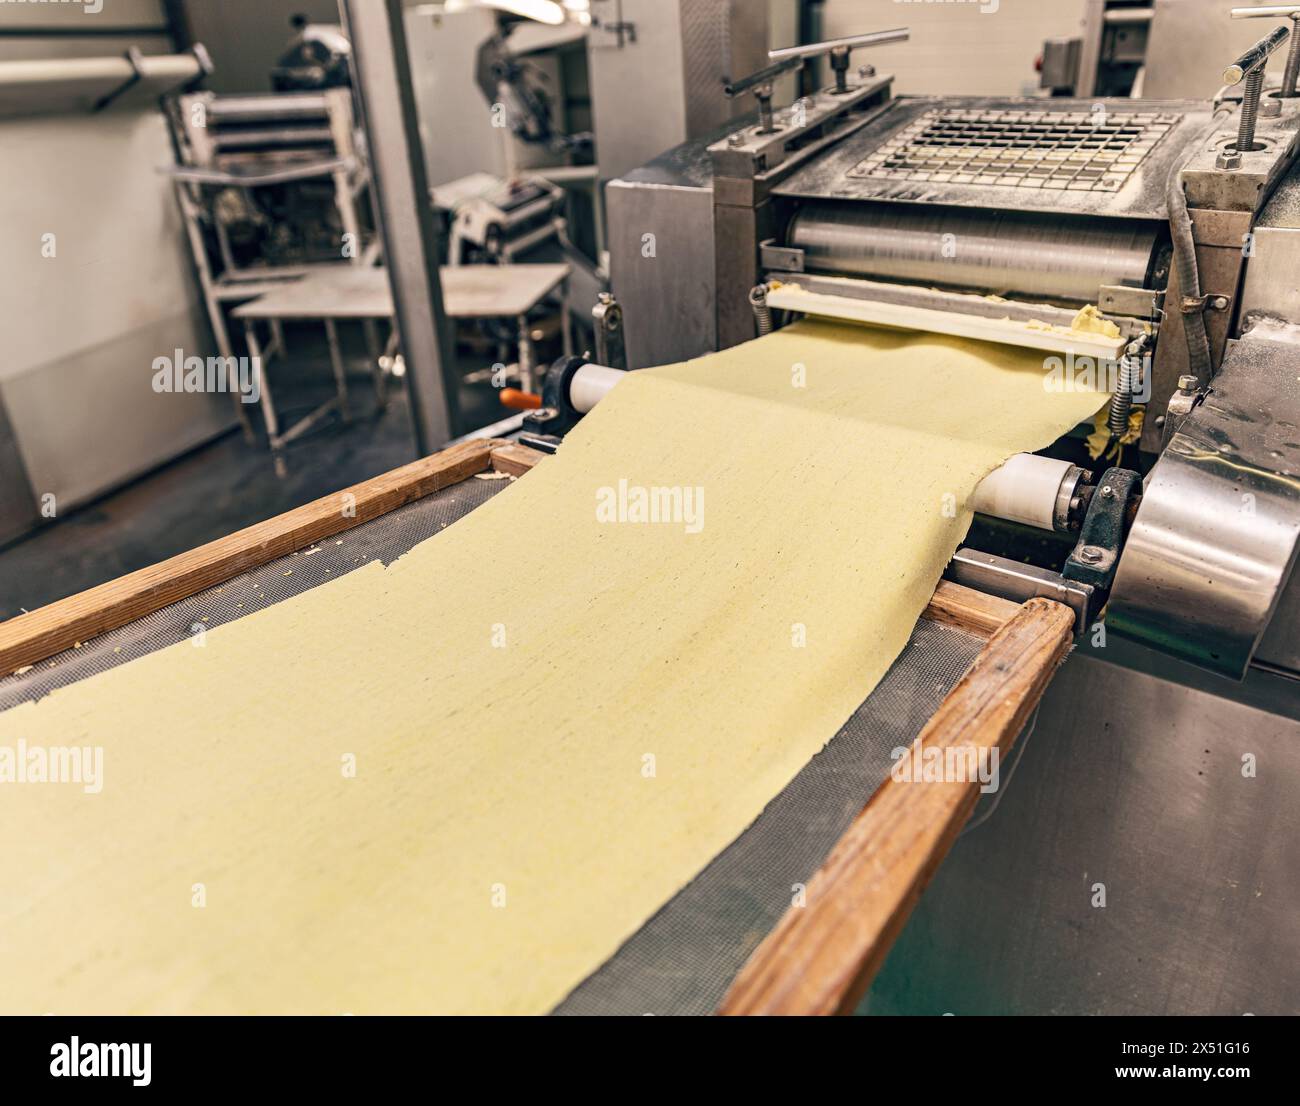 Industrial pasta production conveyor belt, Pasta factory concept Stock Photo